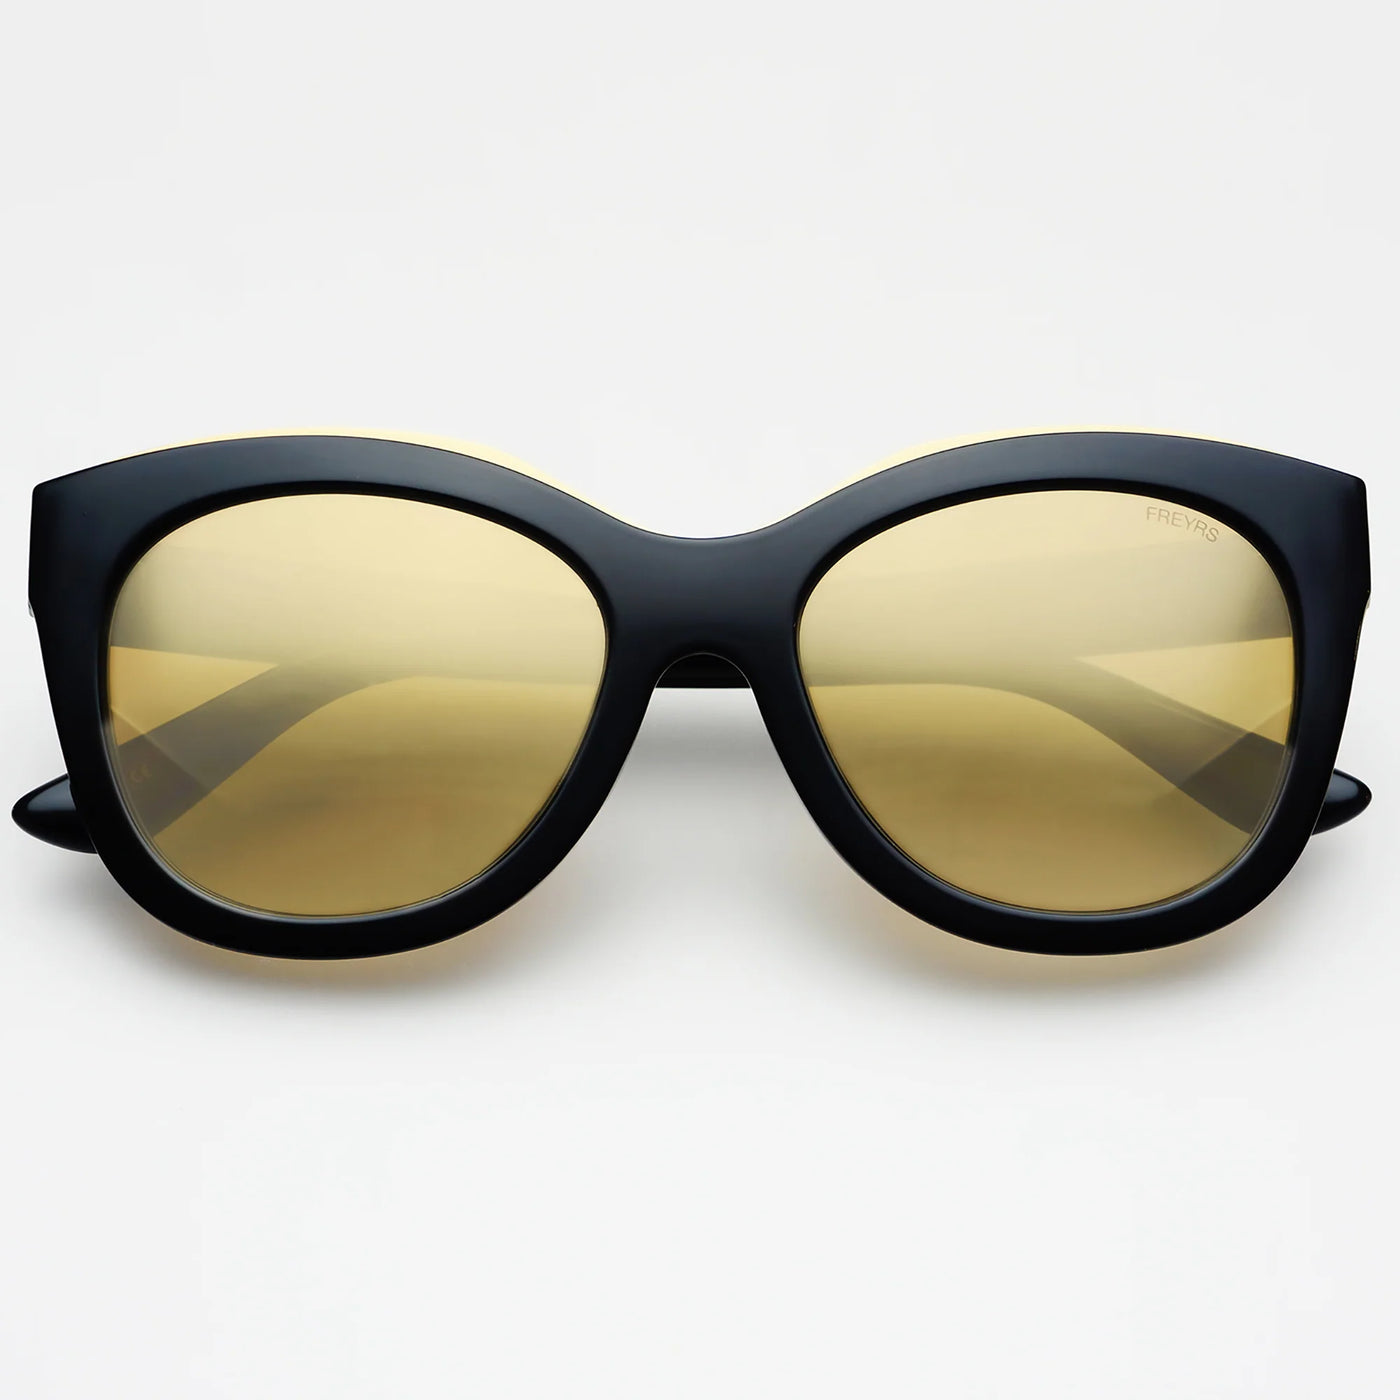 Nolita Sunglasses - Black